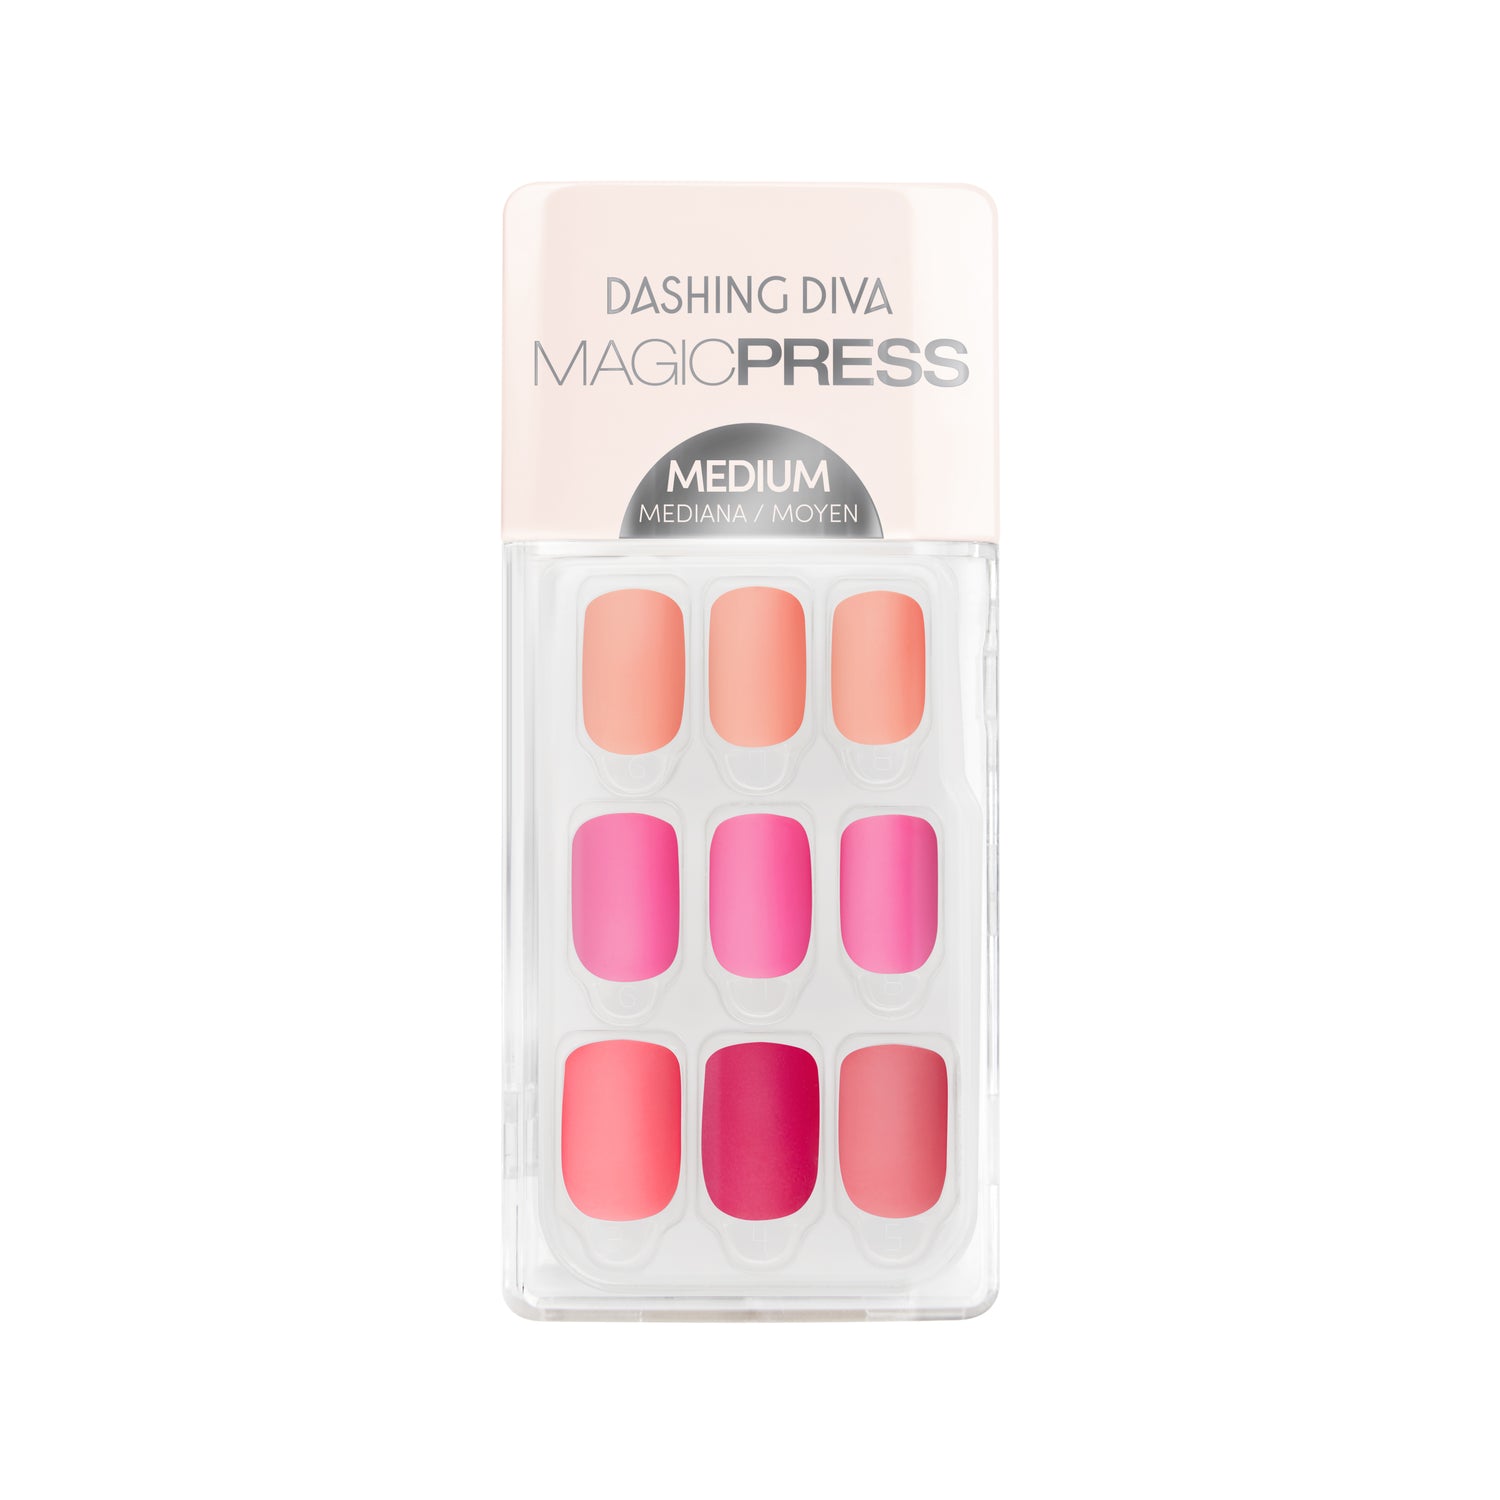 Dashing Diva MAGIC PRESS medium, square gradient pink press on gel nails in matte finish.